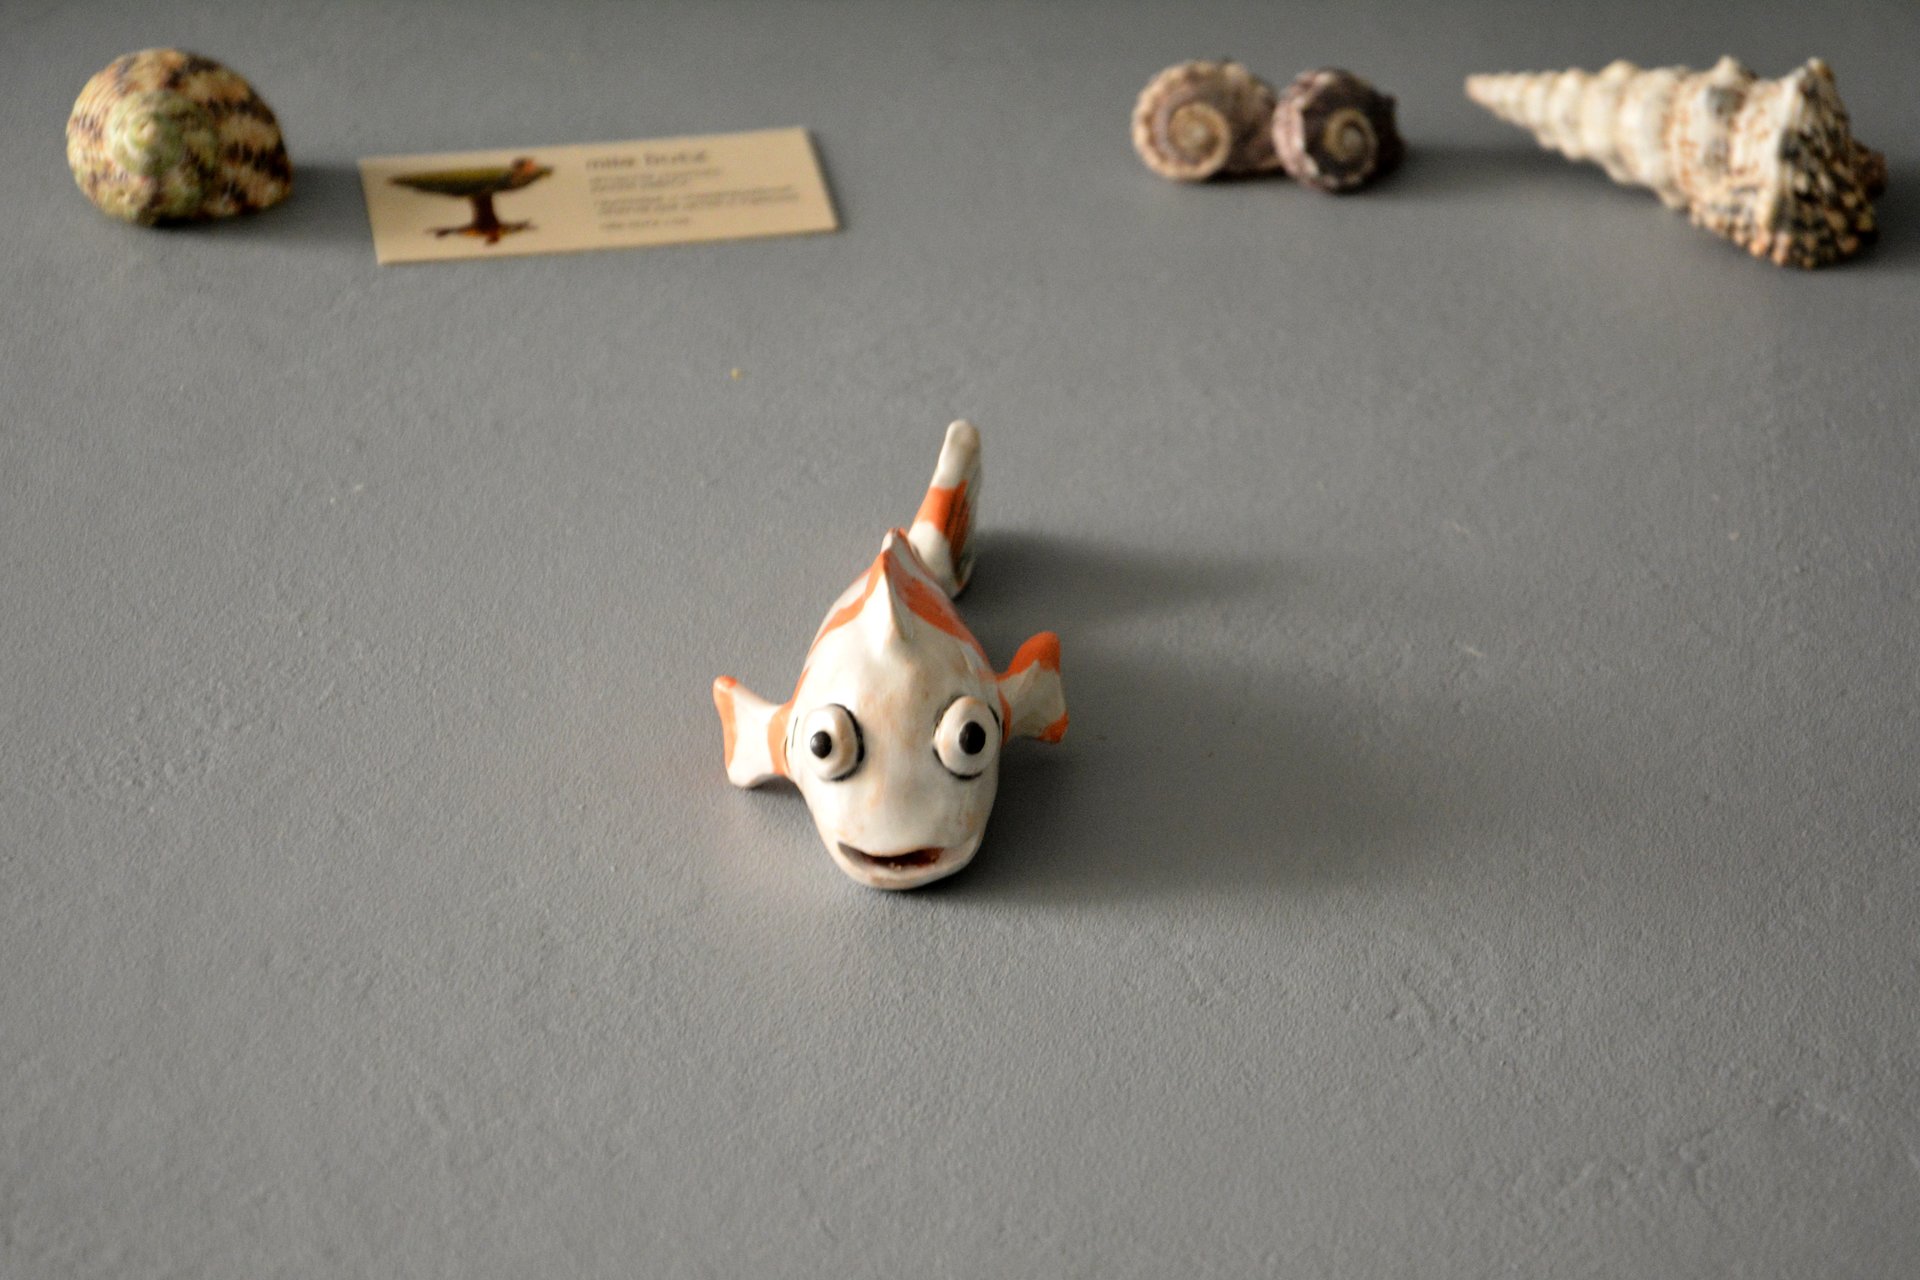 Ceramic Figurine of the Koi fish carp, length - 14 cm, width - 6 cm, height - 5 cm, photo 3 of 6.